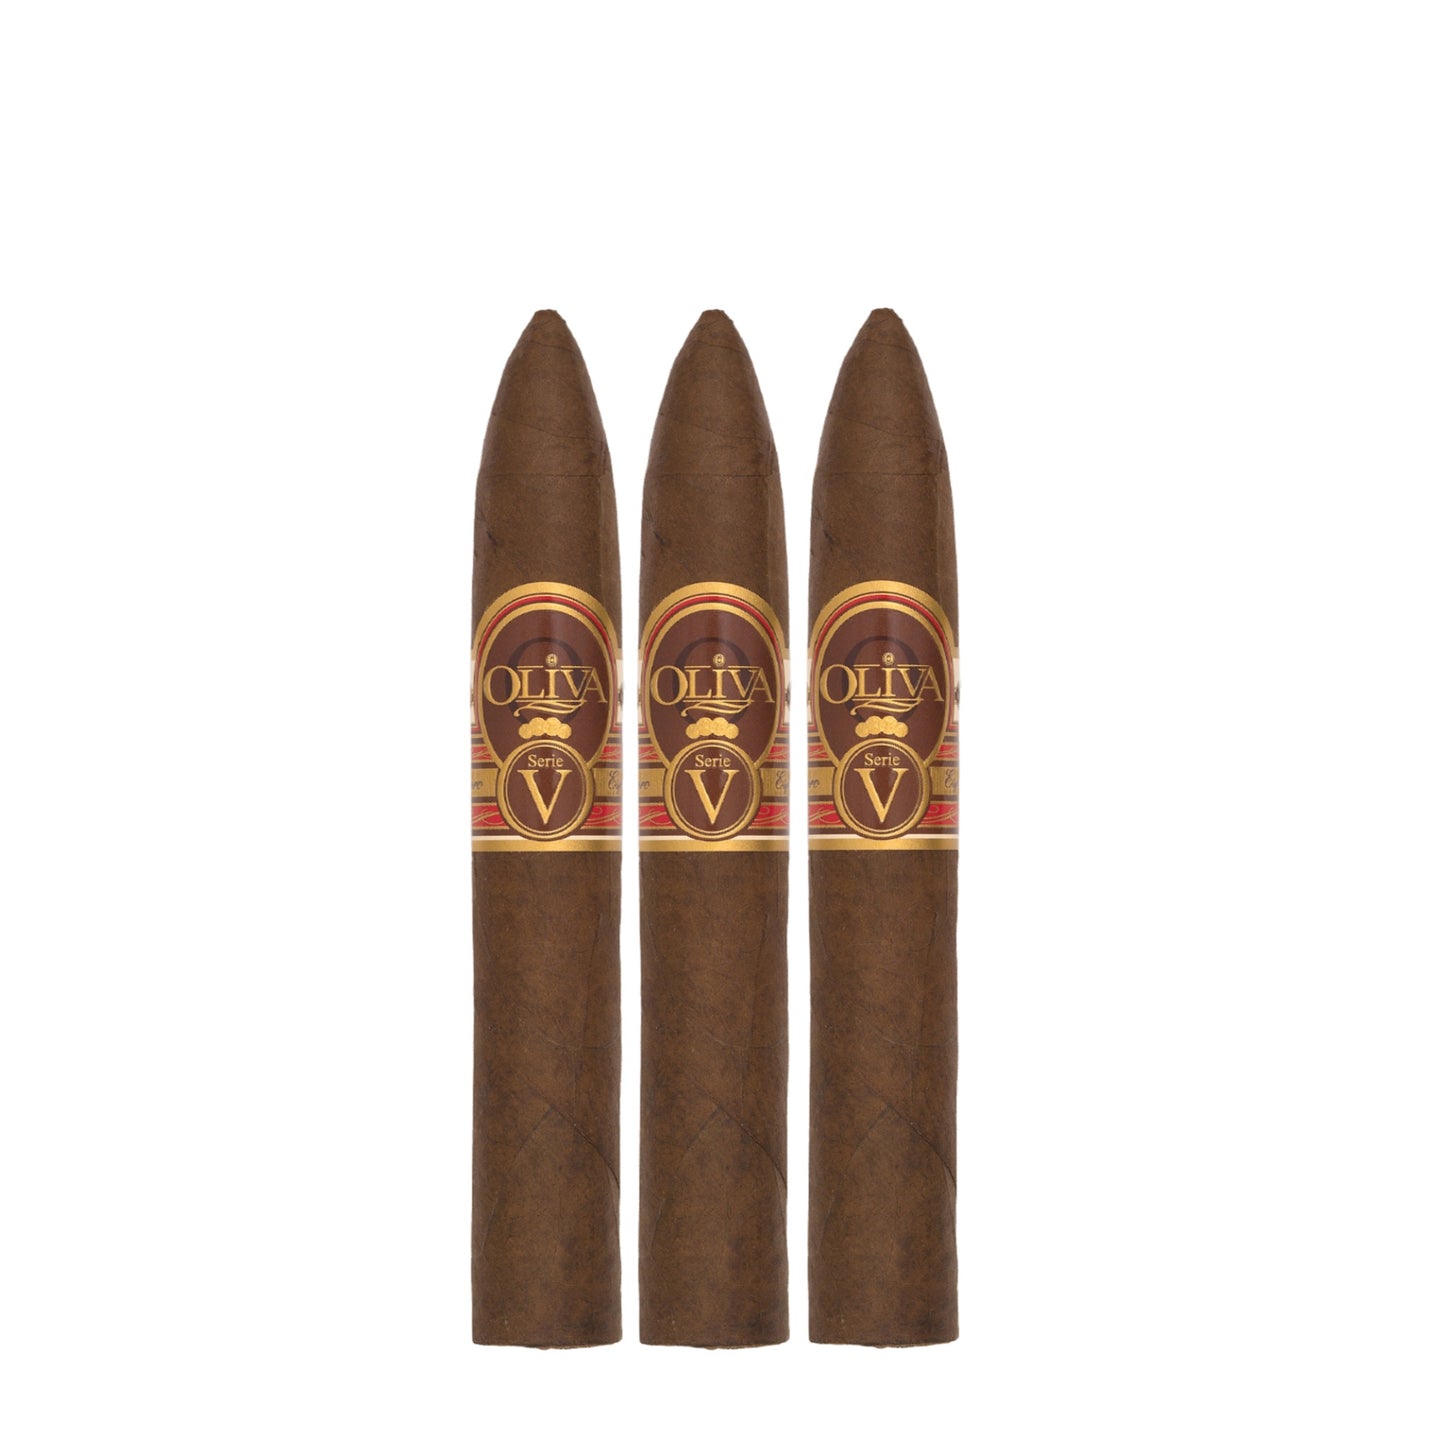 Oliva Serie V Belicoso Cigars to Share